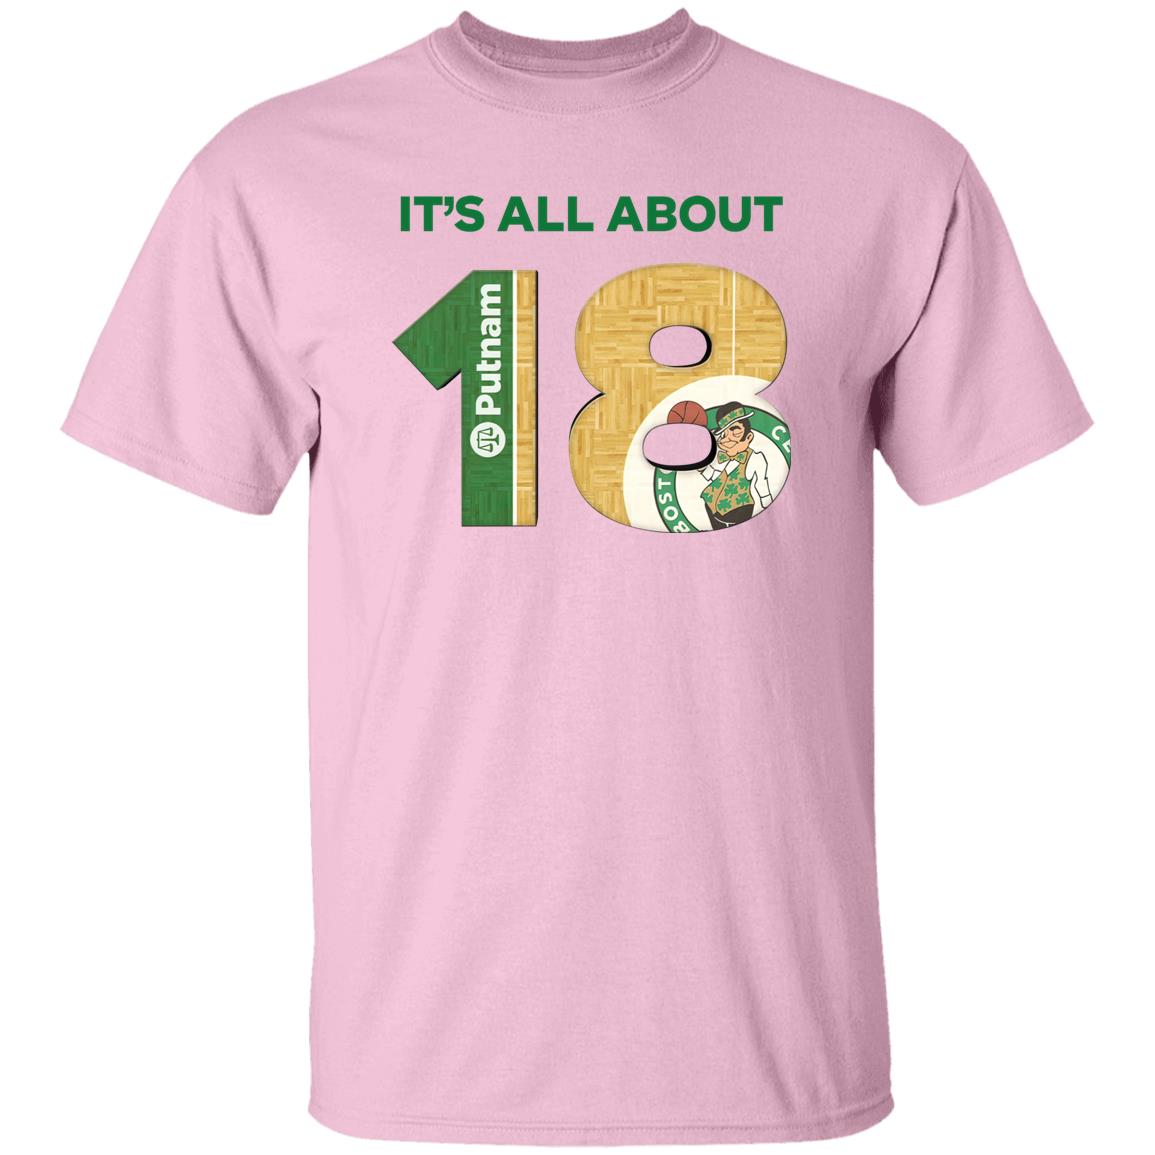 It’s All About 18 Shirt Putnam Investments Boston Celtics